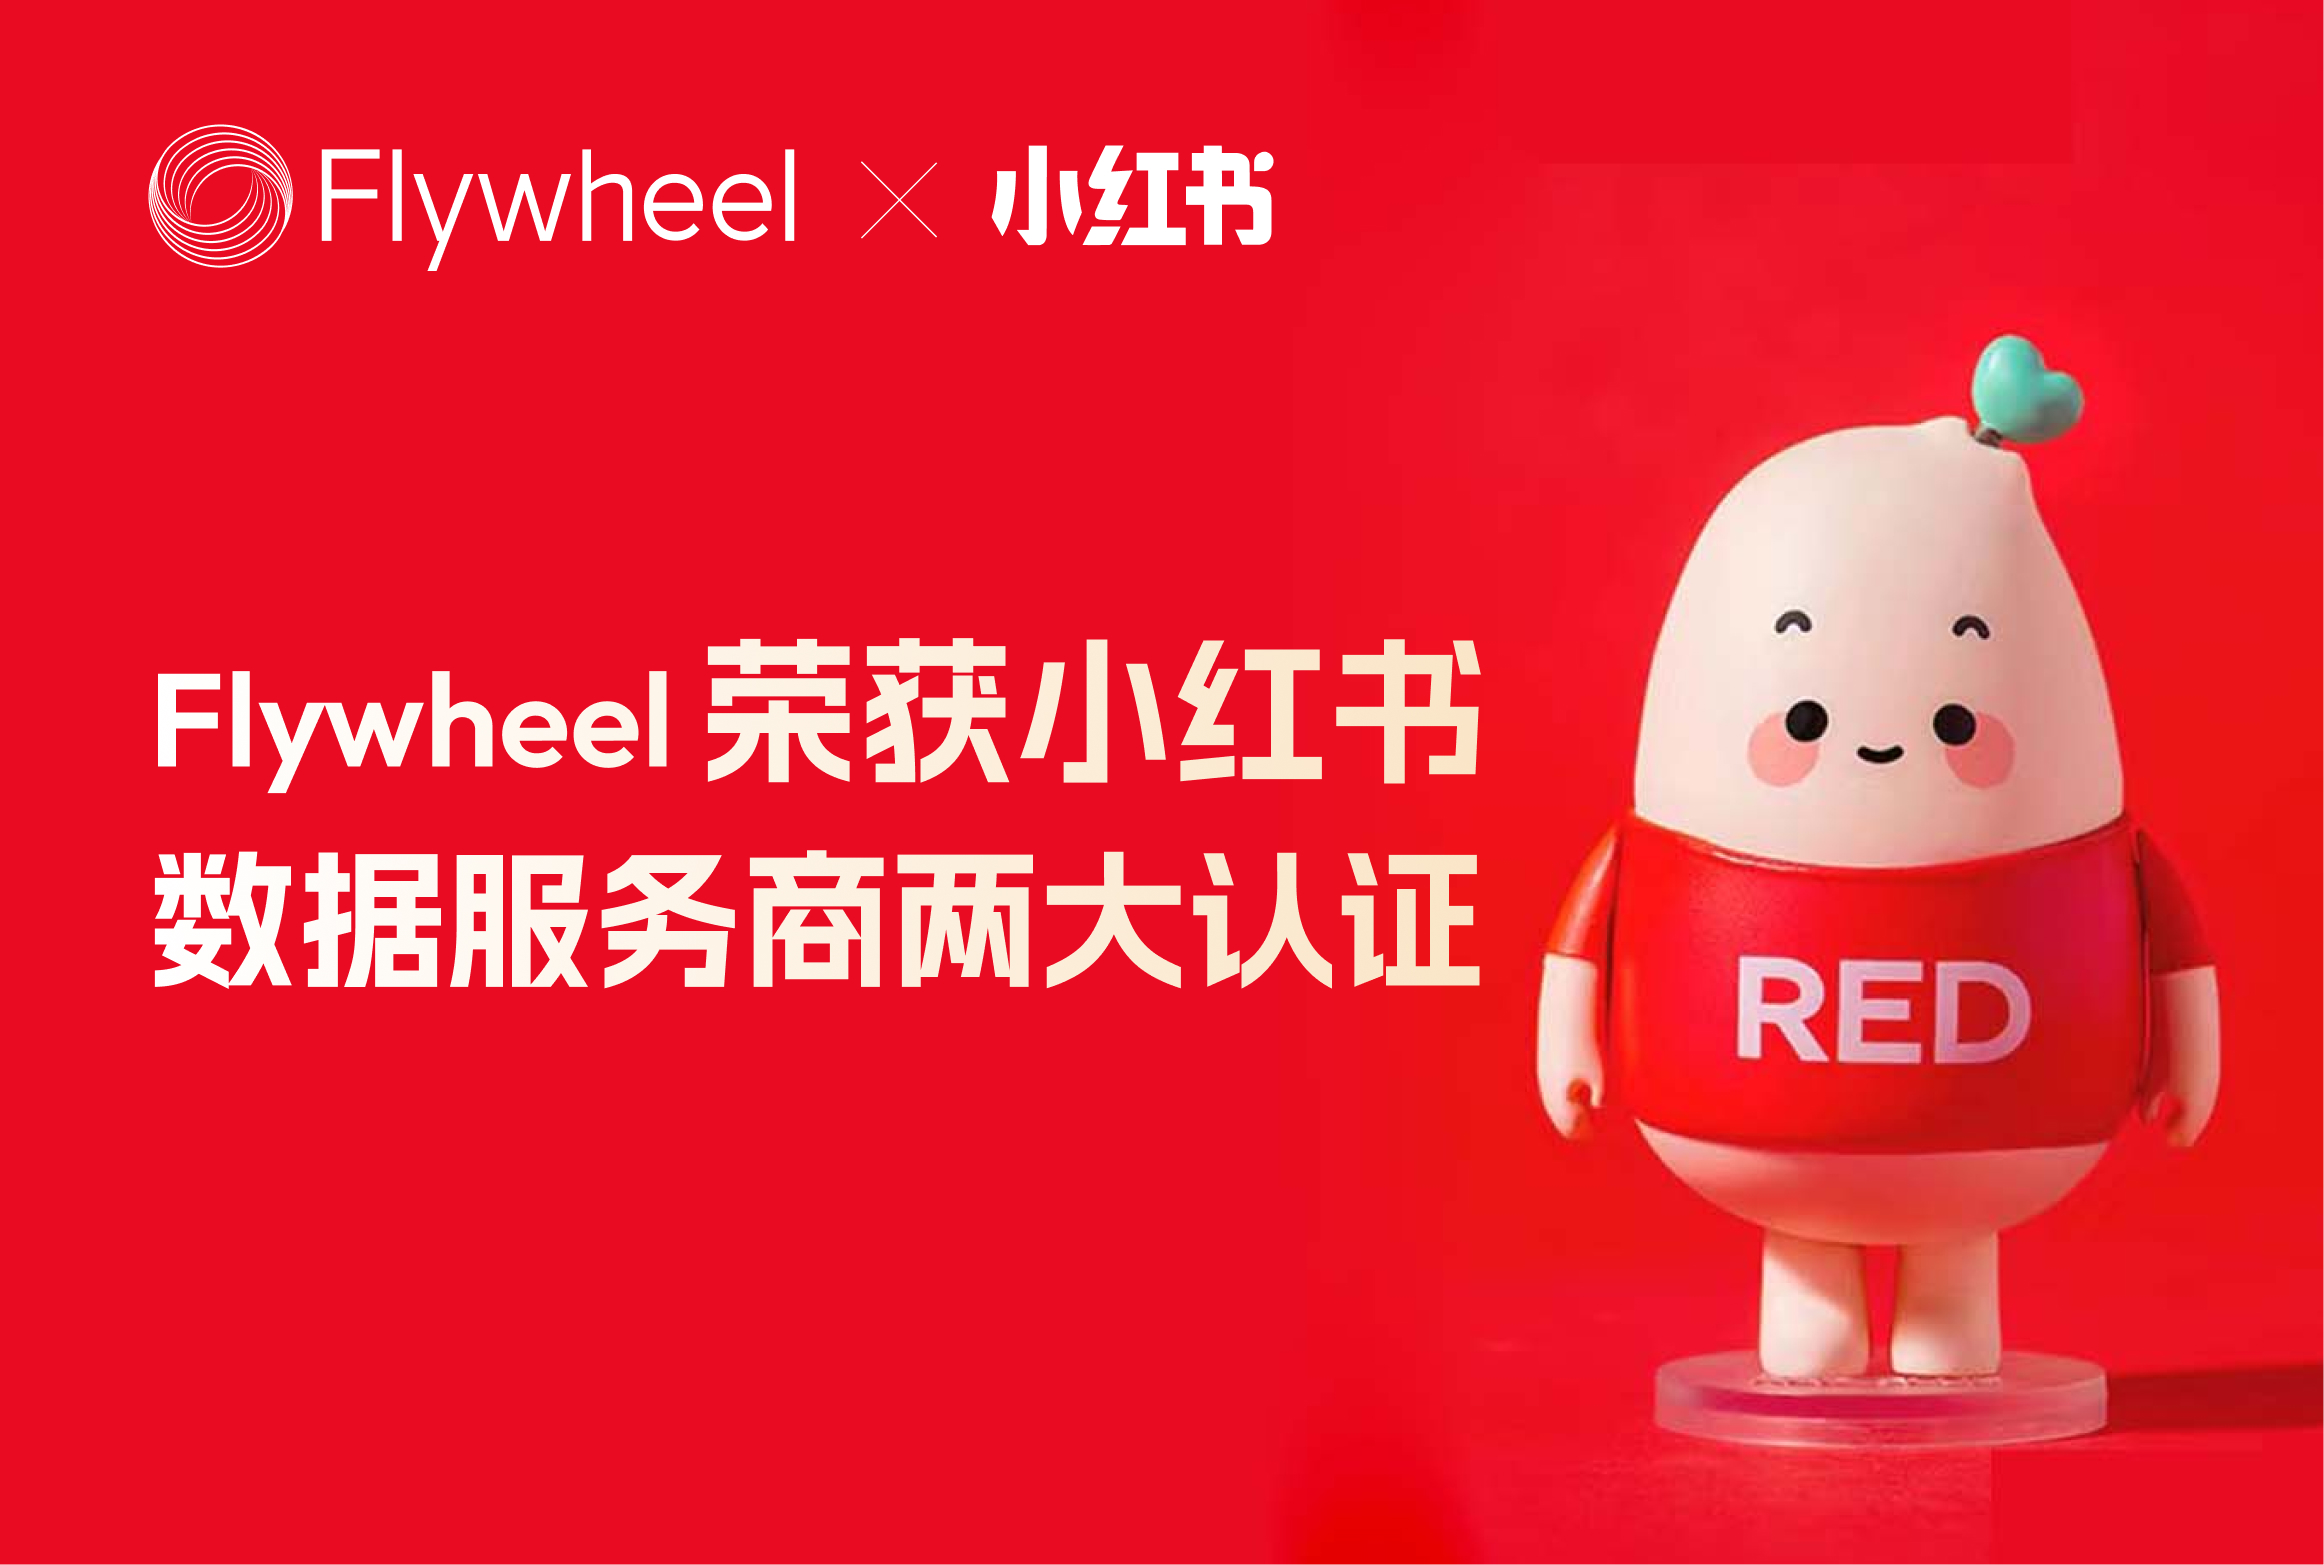 Flywheel飞未荣获小红书首批“20大生活方式人群共建数据服务商”认证